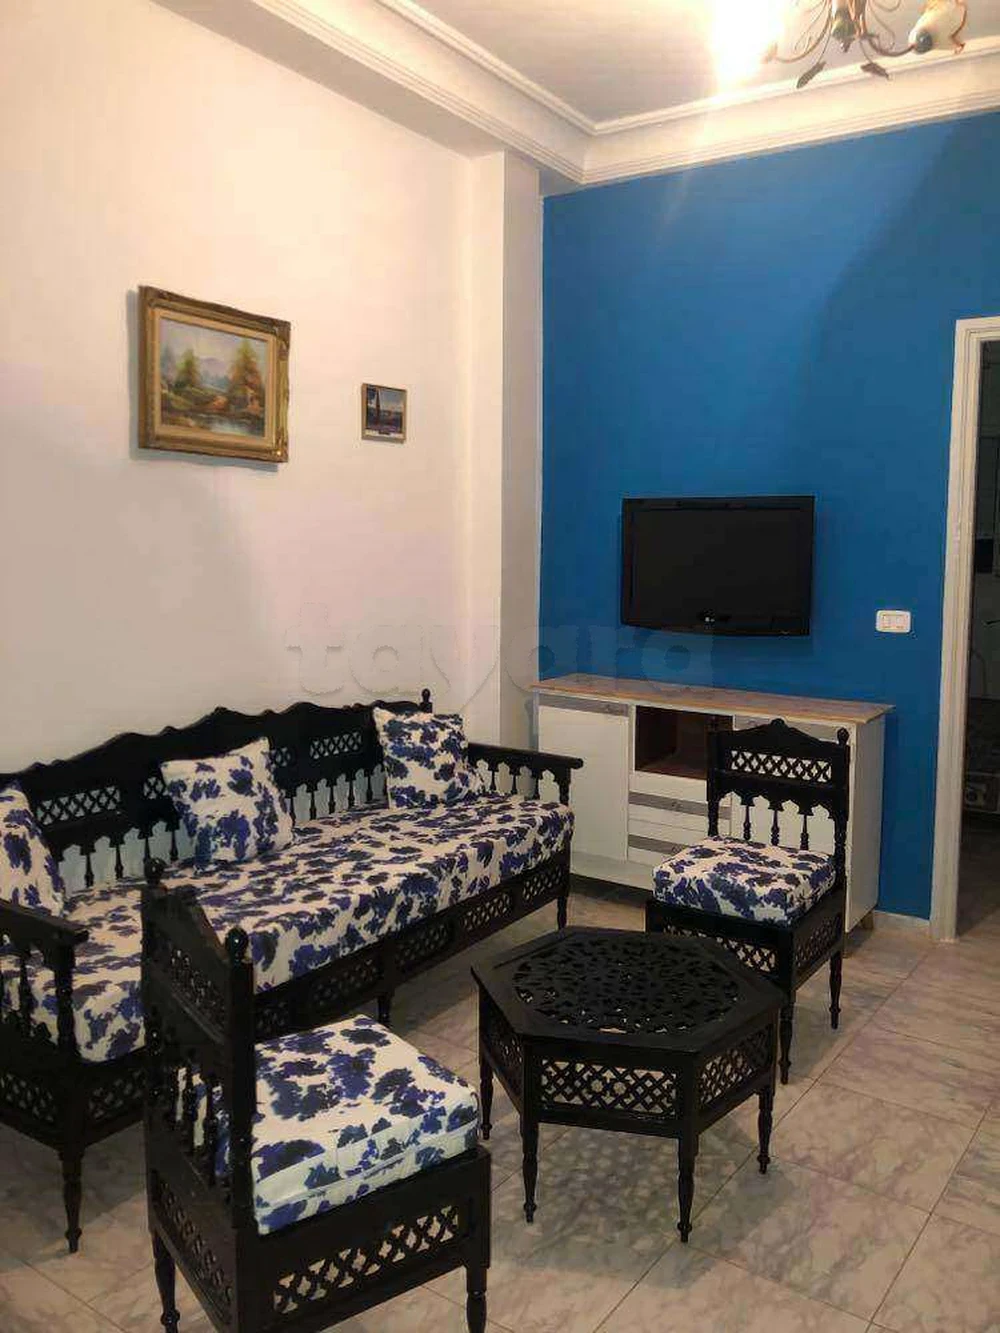 Raoued Cite El Ghazala 1 Location Maisons Etage de villa meubl gazala